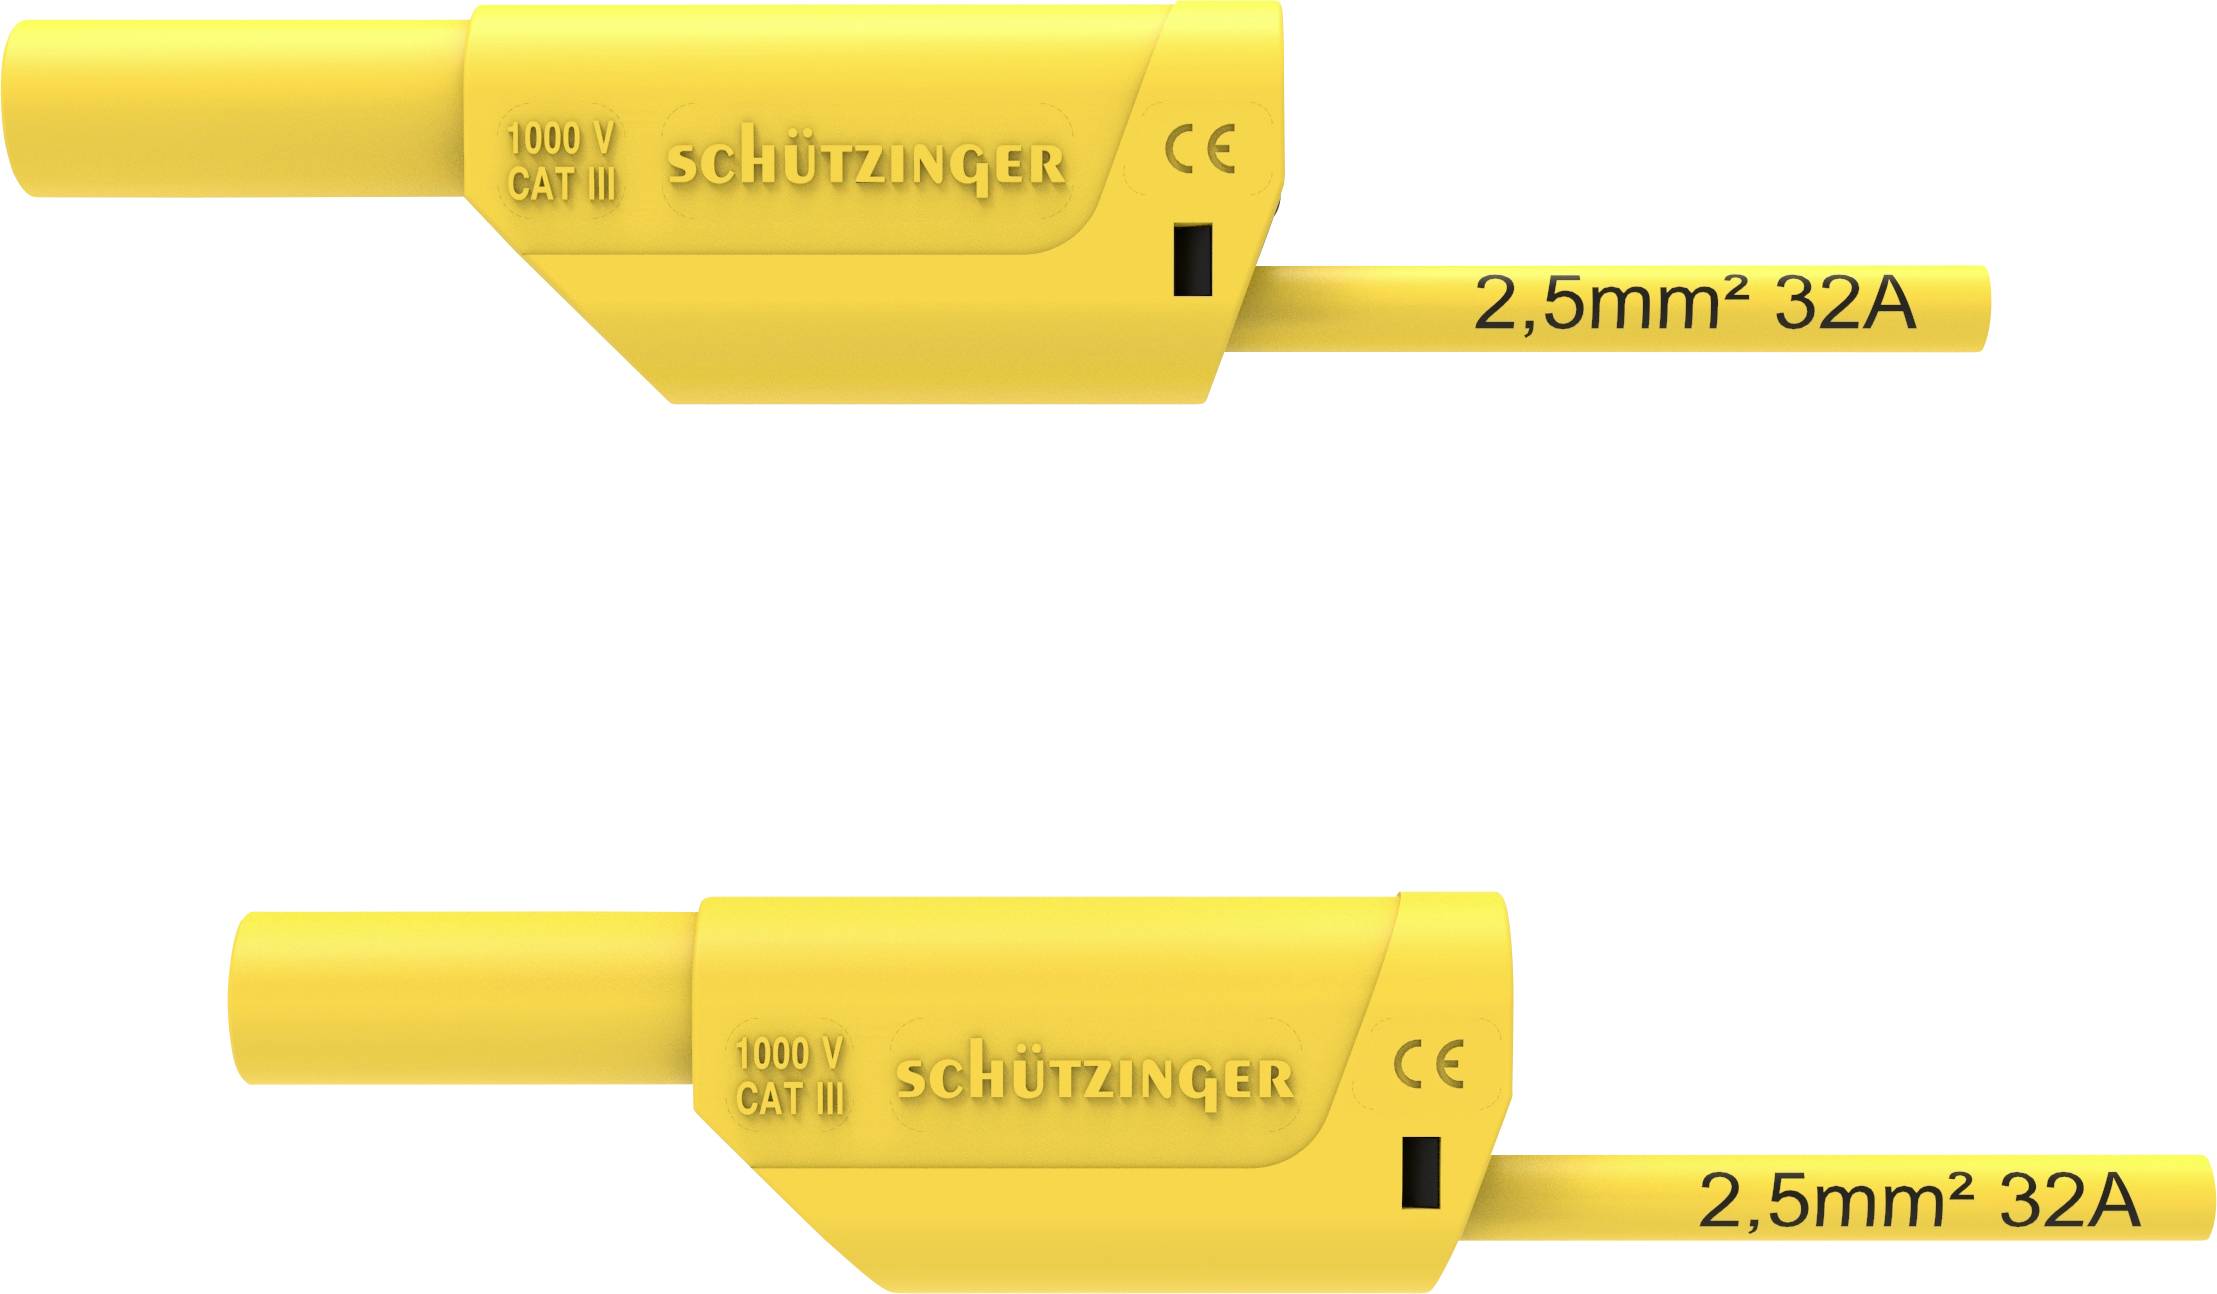 SCHÜTZINGER VSFK 8700 / 2.5 / 200 / GE Sicherheits-Messleitung [4 mm-Stecker - 4 mm-Stecker] 20